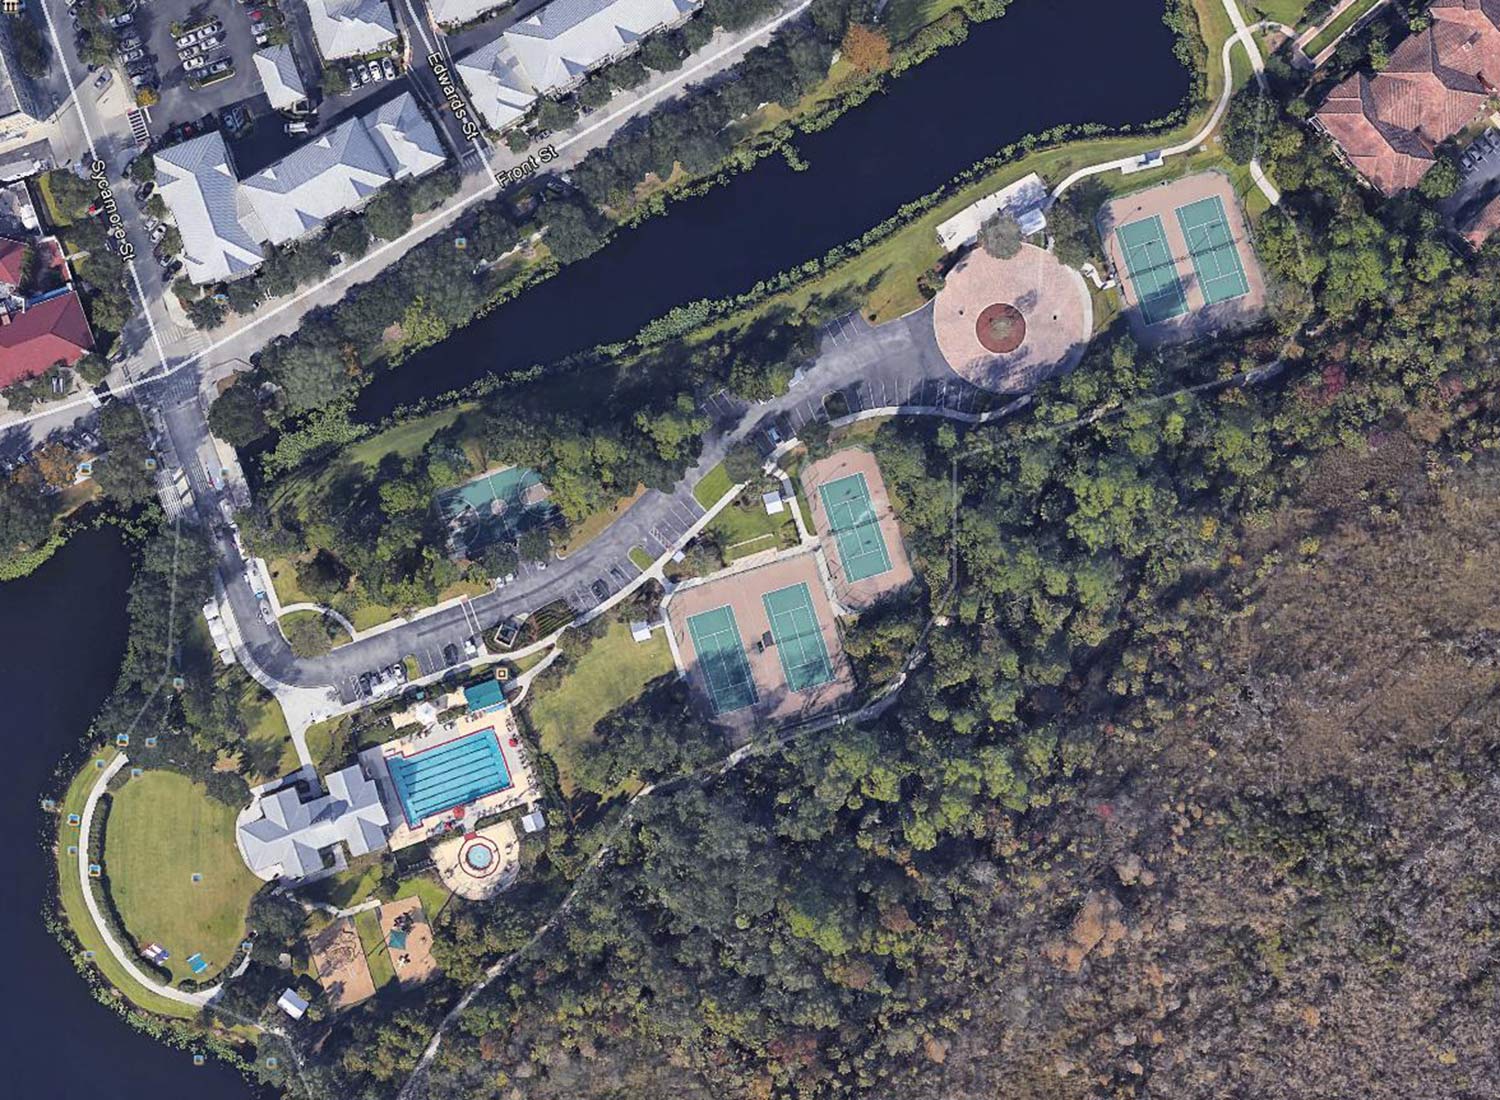 Google Image of Lakeside Park